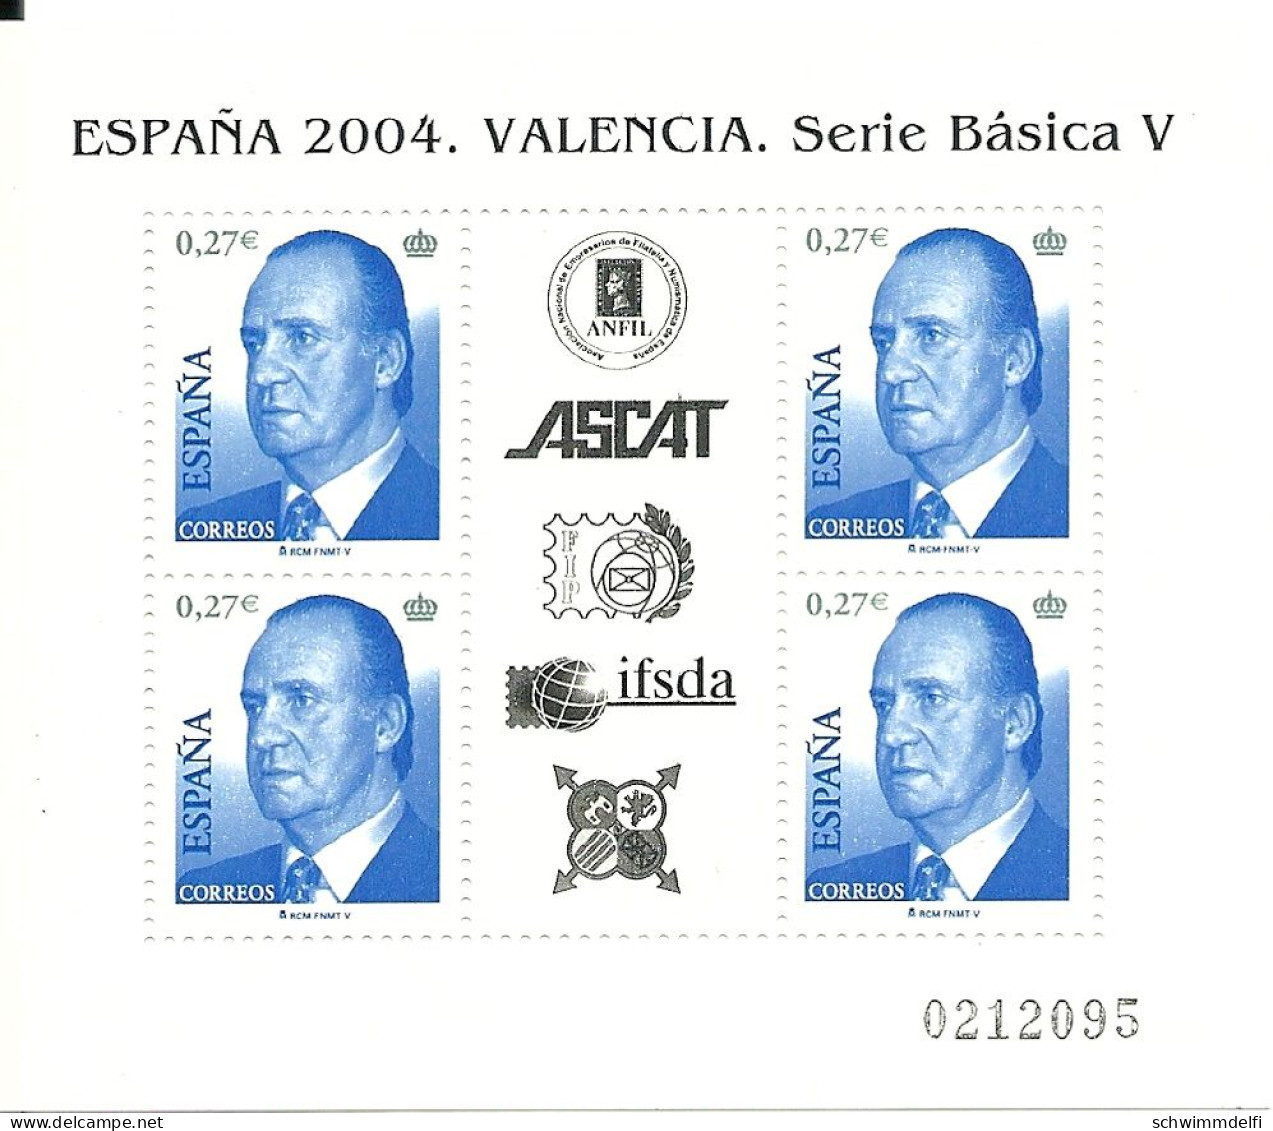 SPANIEN - ESPAÑA - 2004, SERIE BÁSICA V - VALENCIA (IV): REY JUAN CARLOS I. - MNH - Blocs & Feuillets